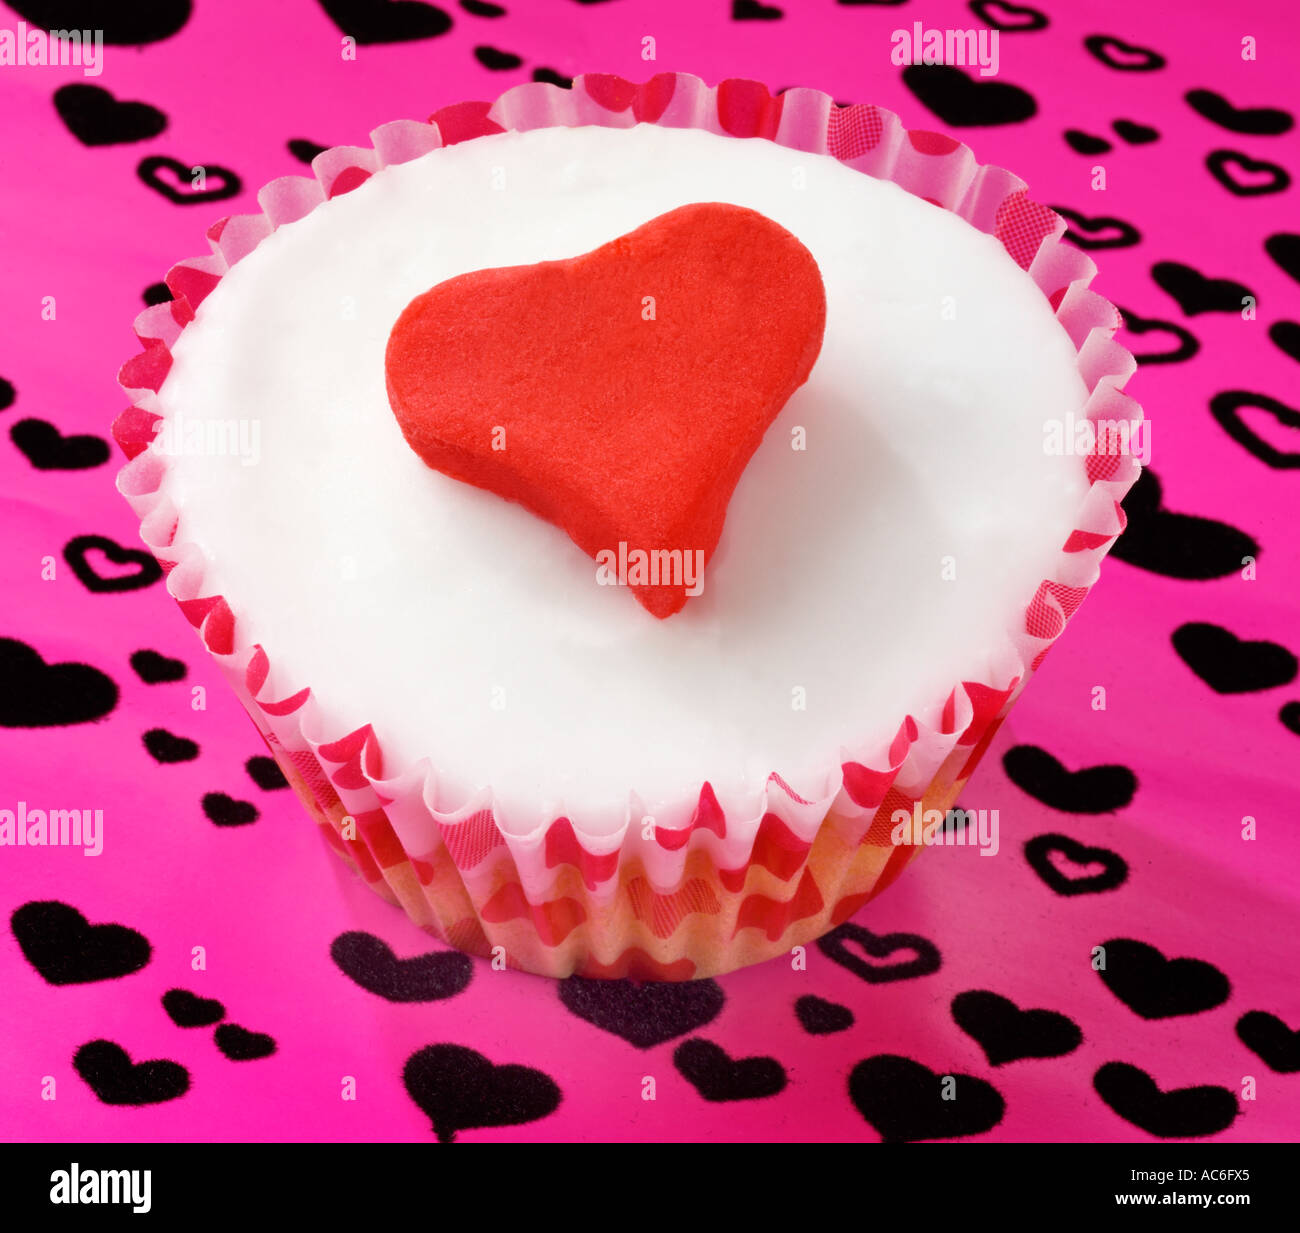 LOVE HEART CUP CAKE / FAIRY CAKE Stock Photo